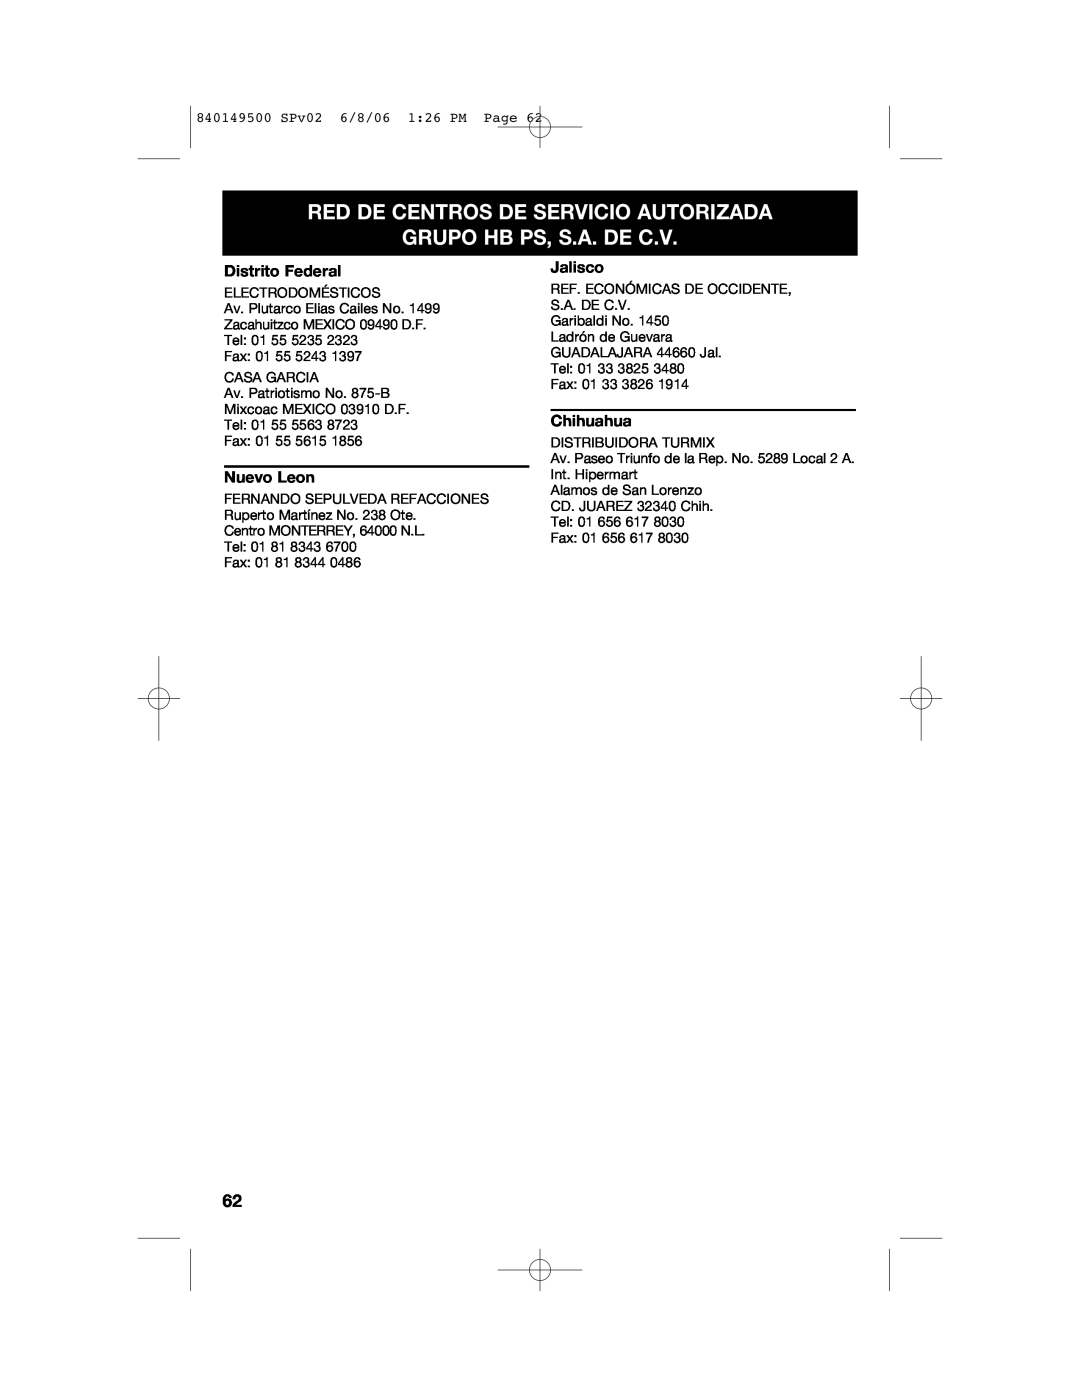 Proctor-Silex 840149500 manual Red De Centros De Servicio Autorizada Grupo Hb Ps, S.A. De C.V, Distrito Federal, Nuevo Leon 